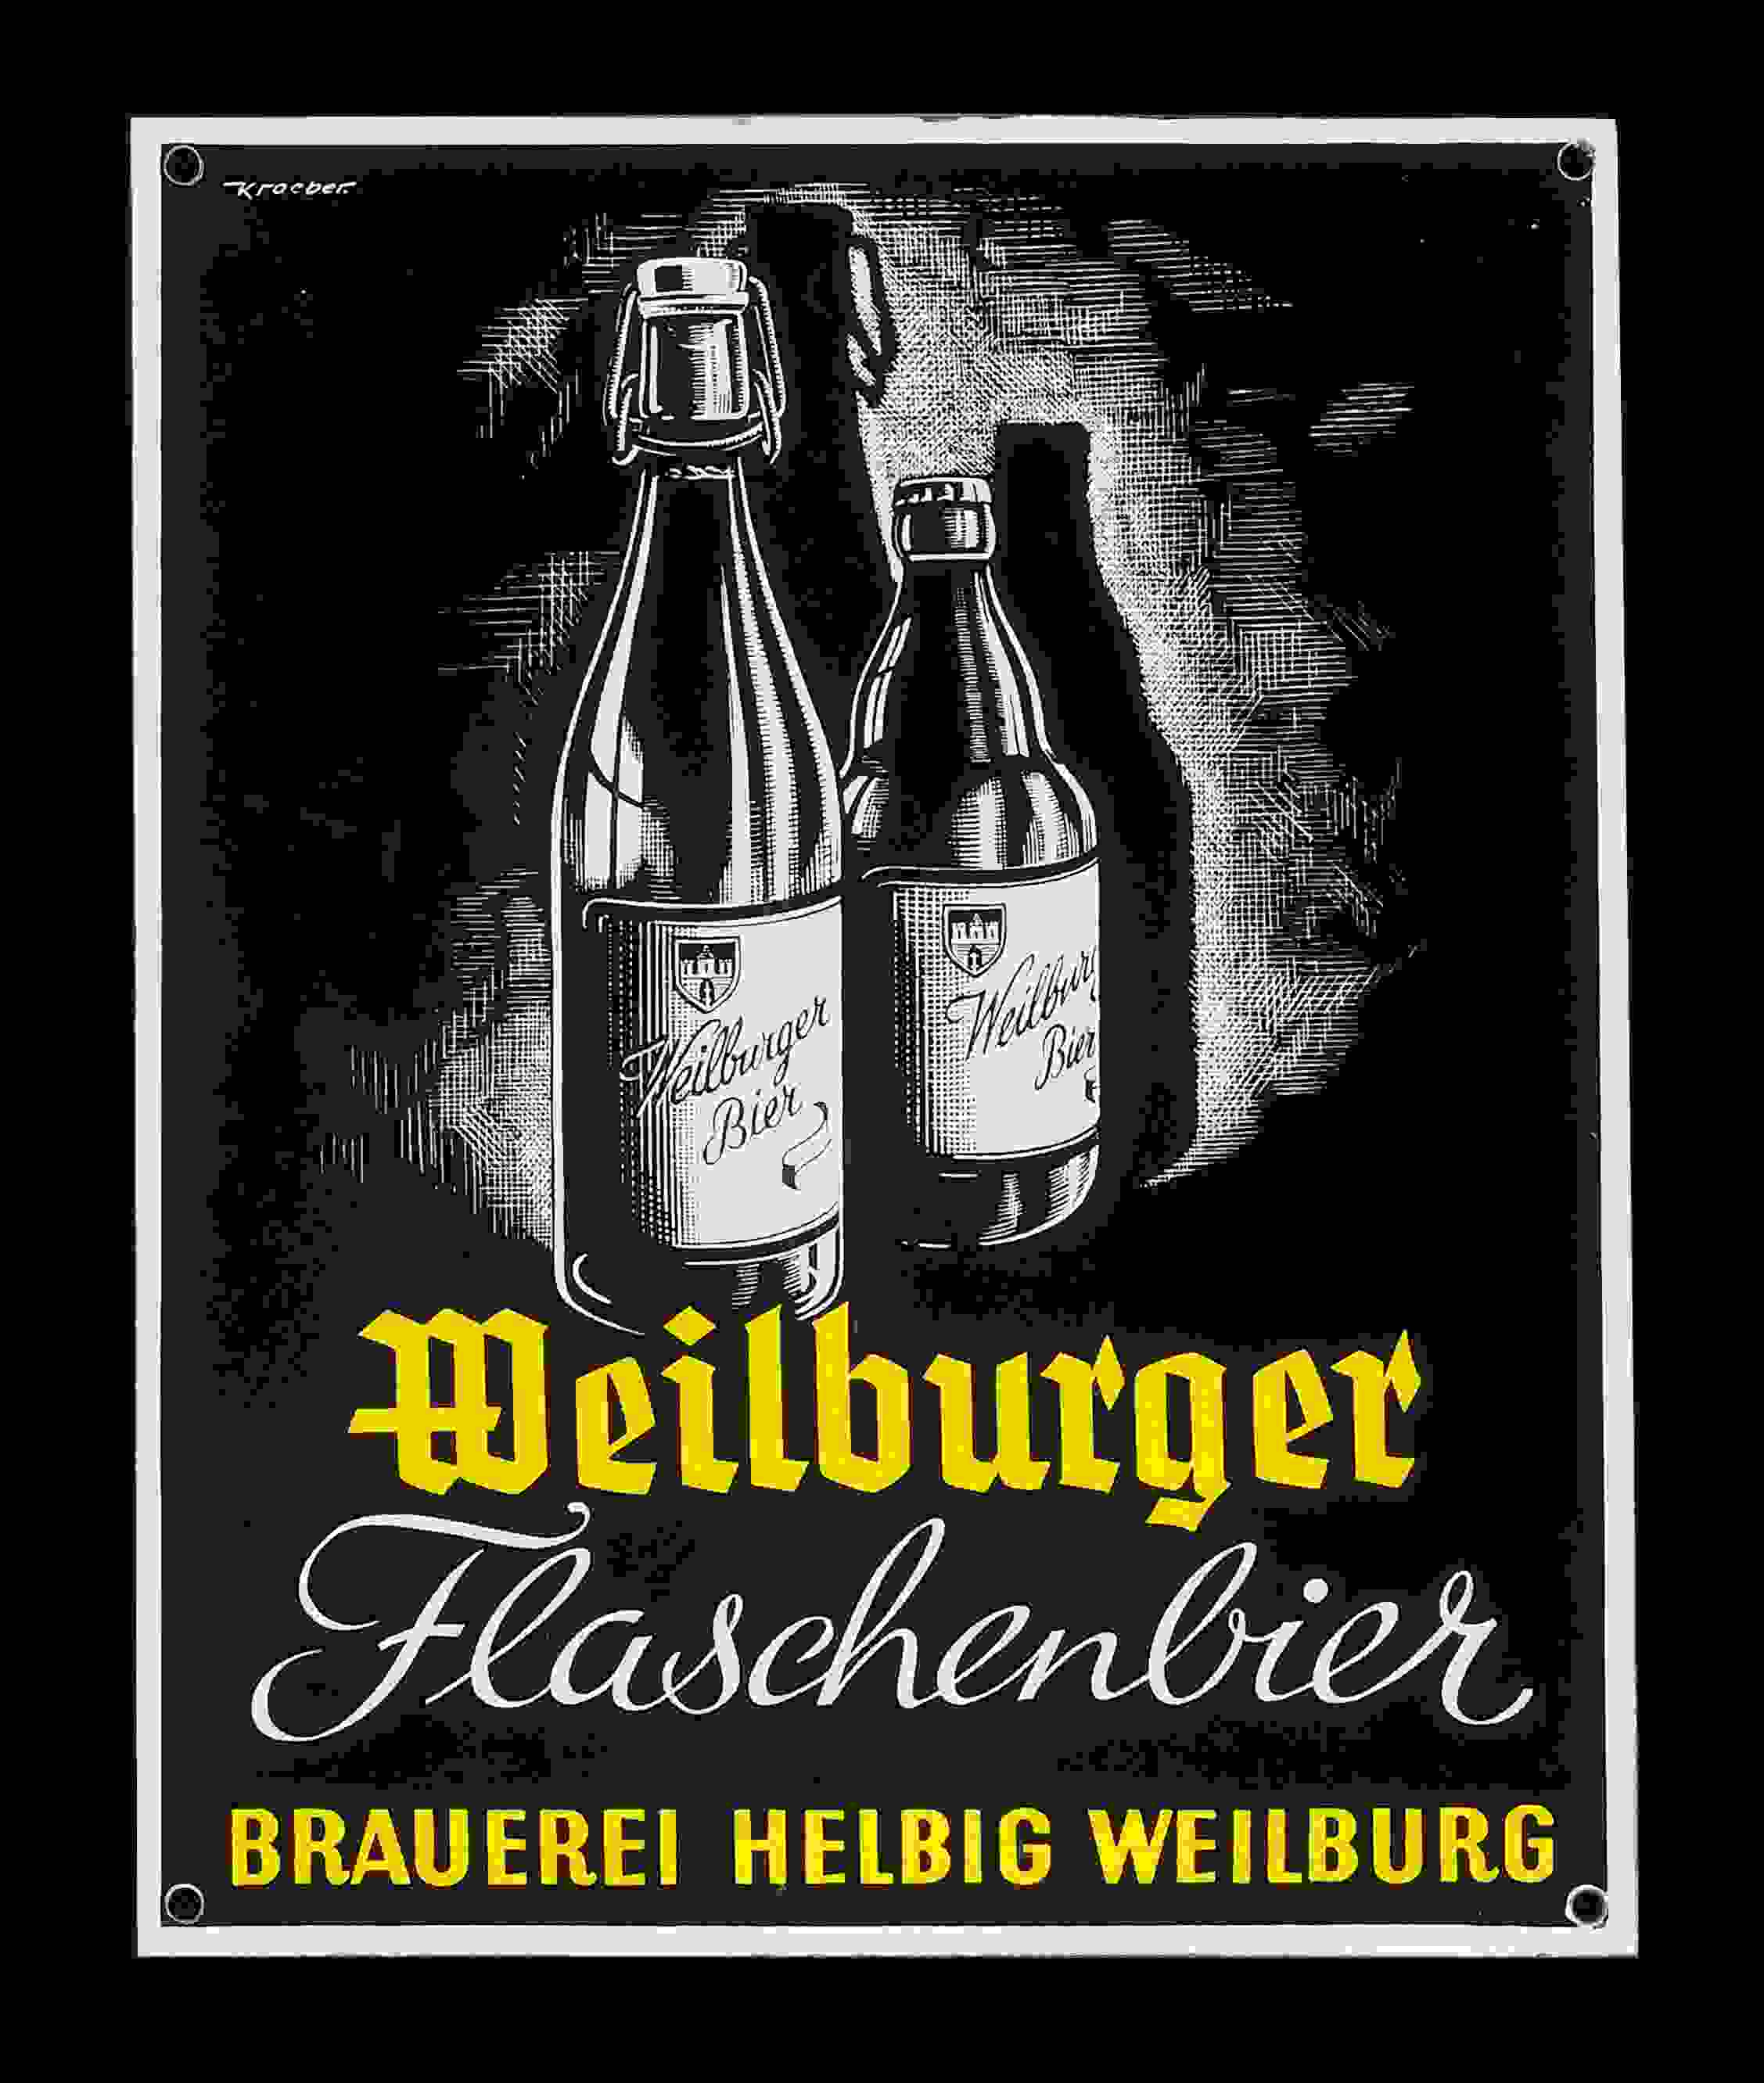 Weilburger Flaschenbier 